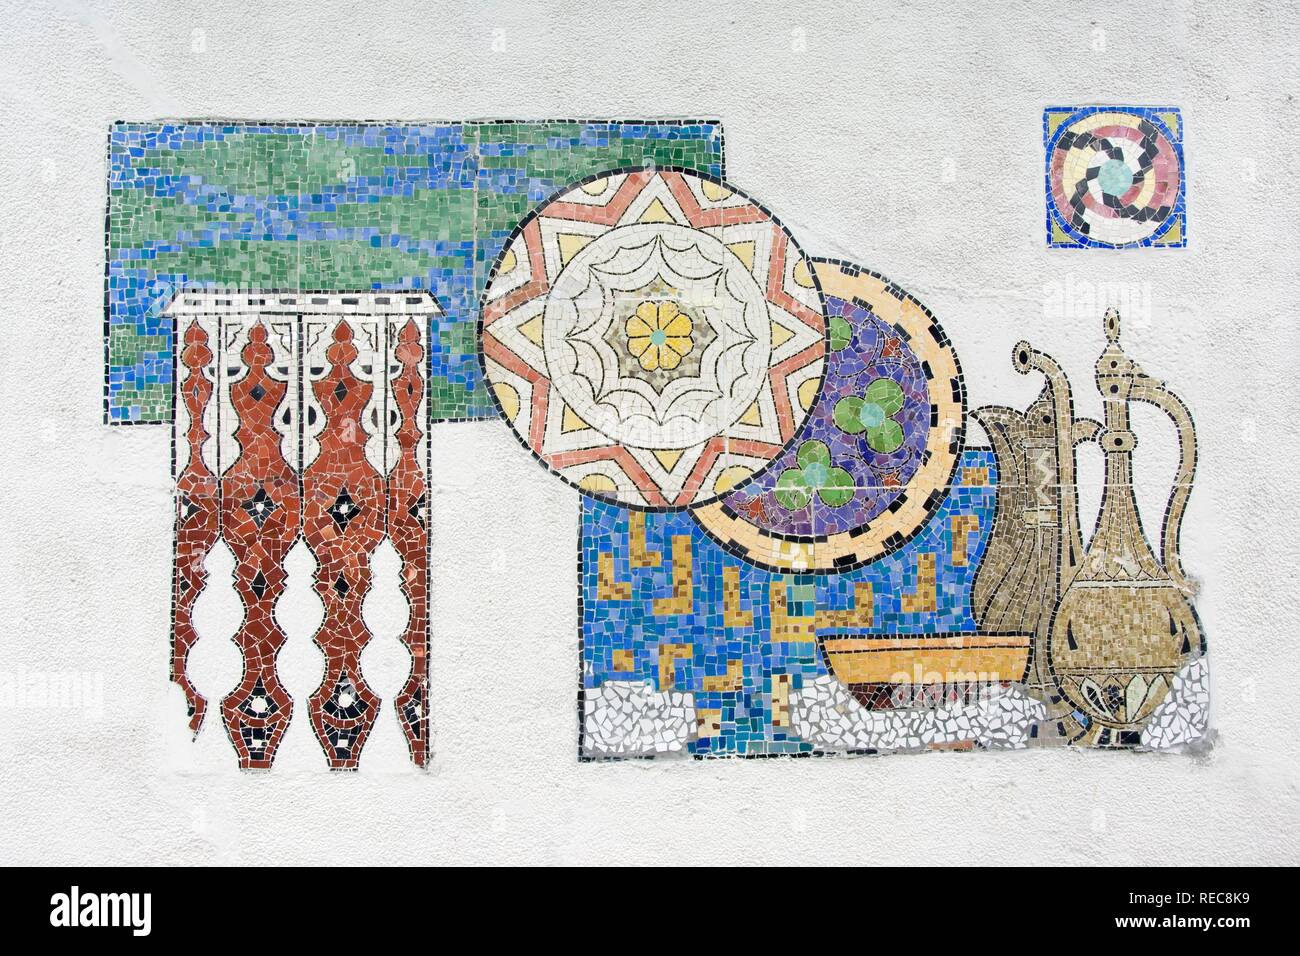 Tashkent, Museum of Applied Arts, mosaics, Uzbekistan Stock Photo